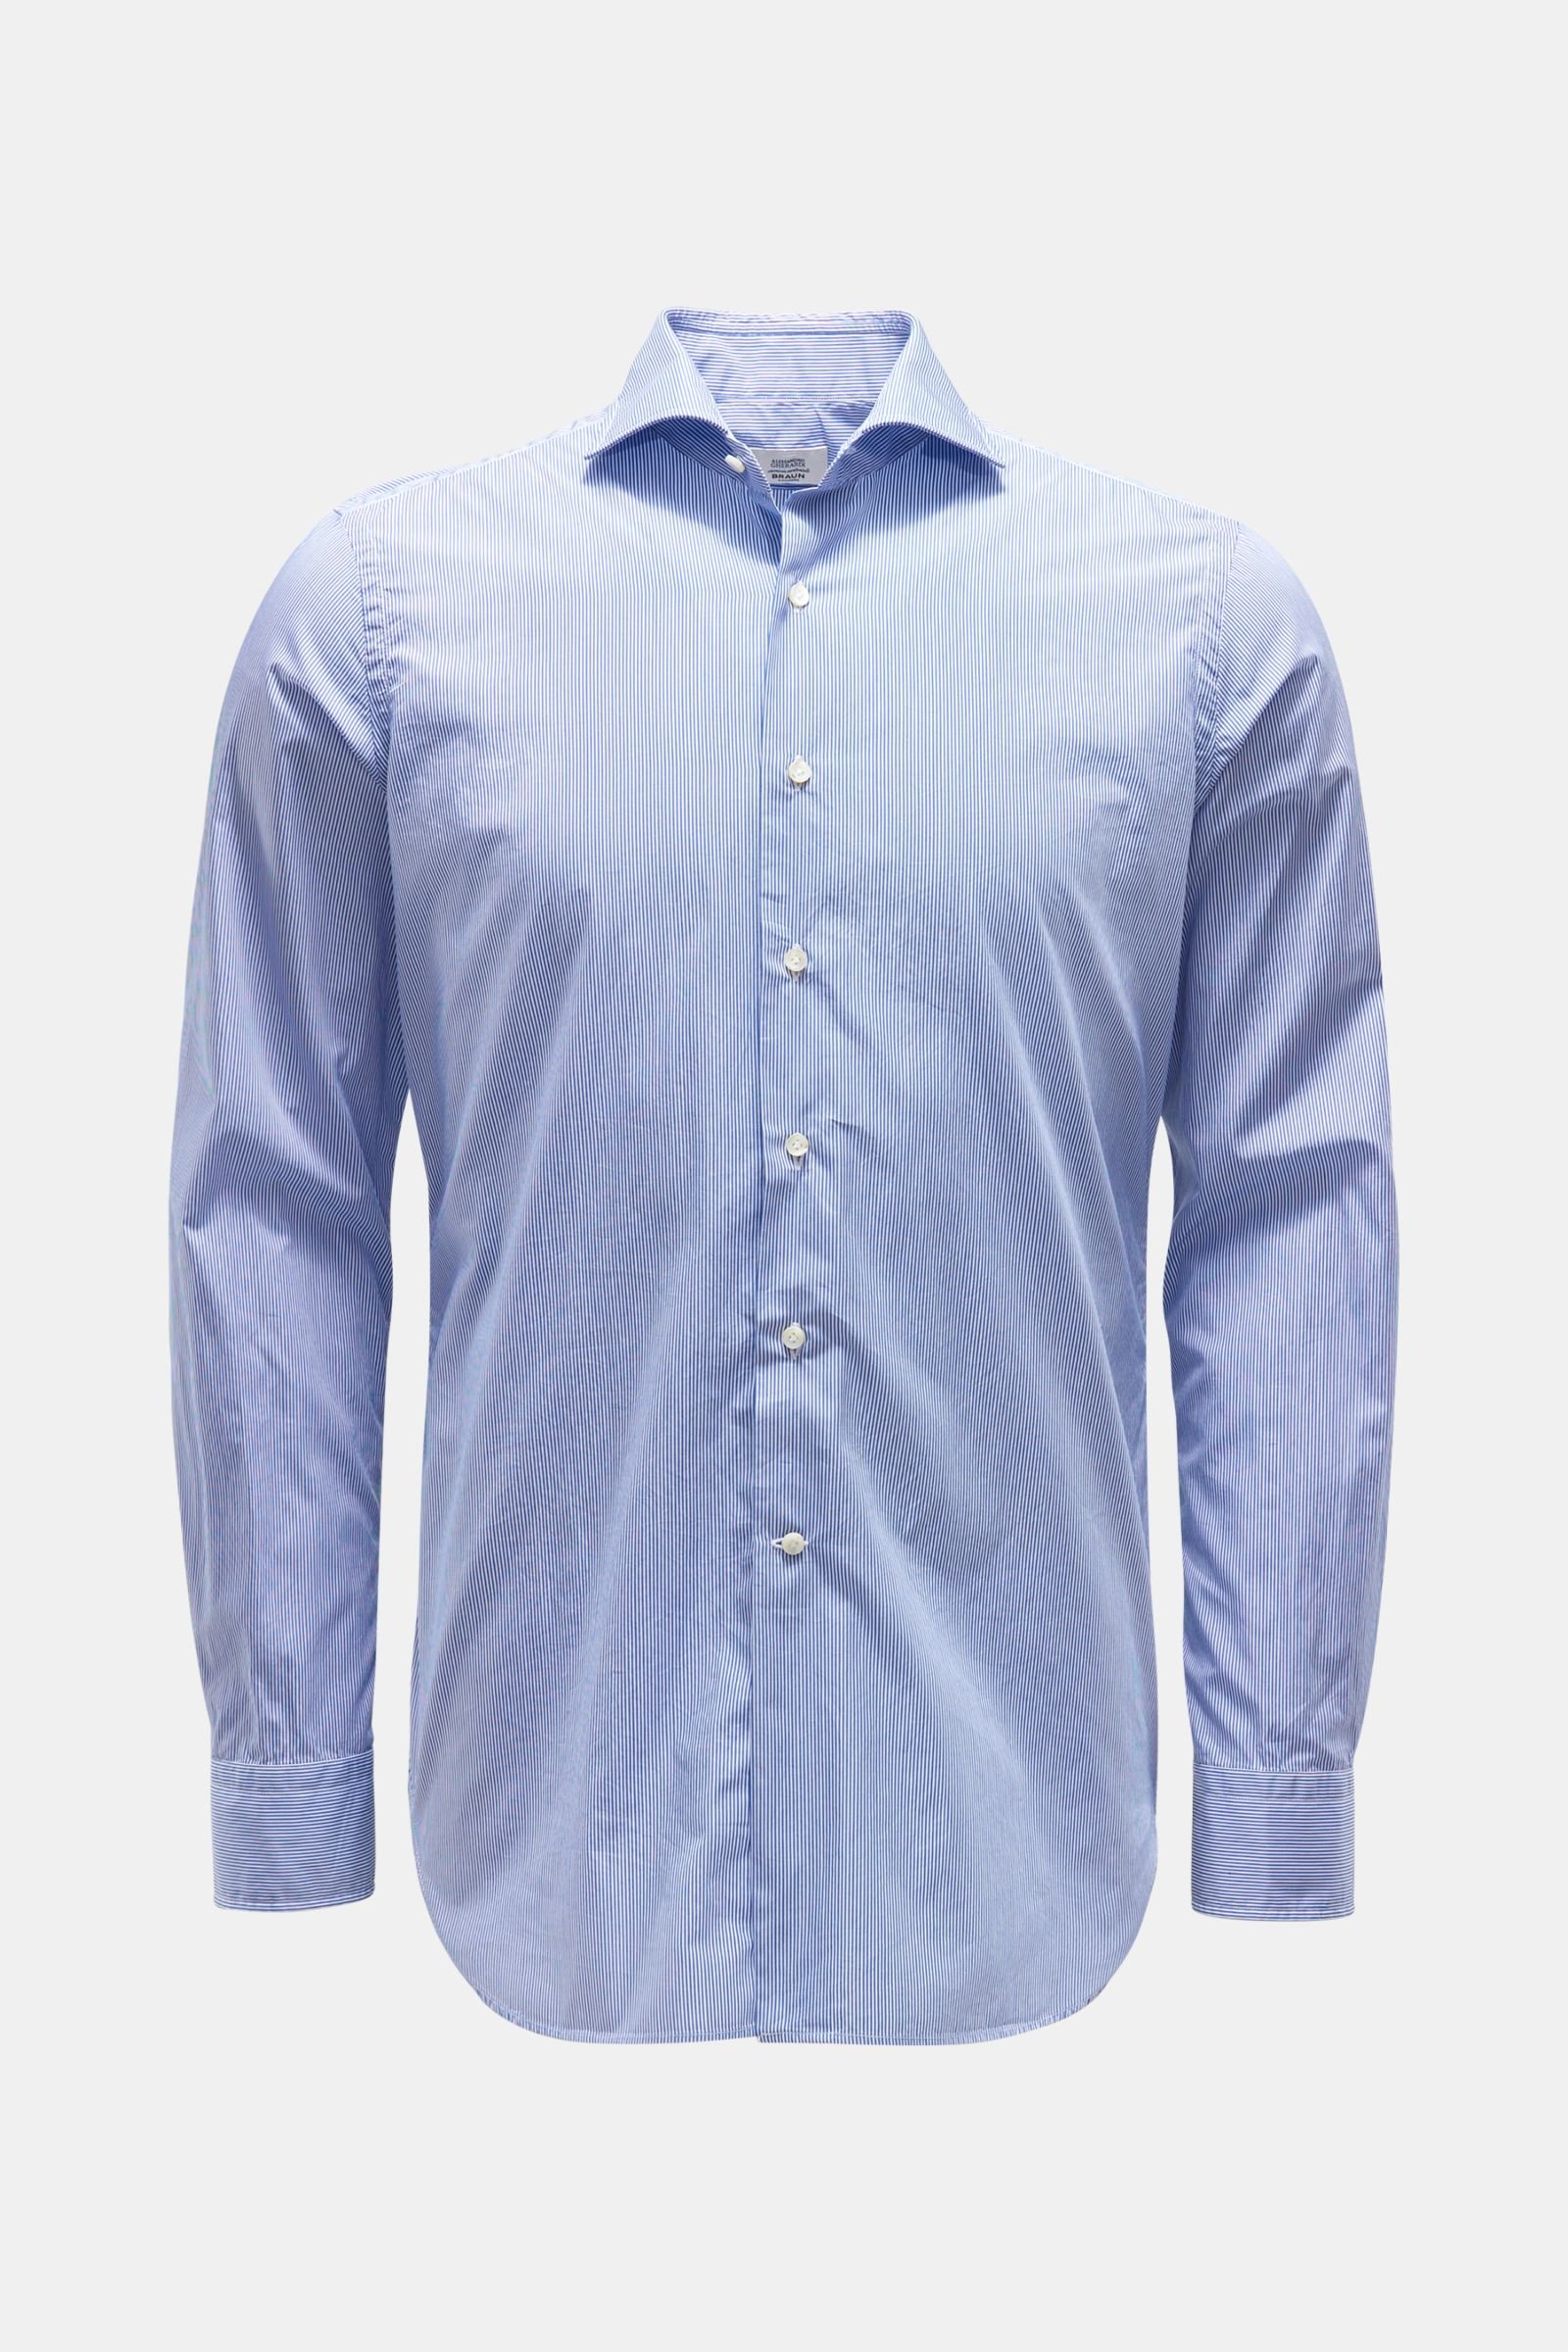 Casual shirt shark collar smoky blue/white striped